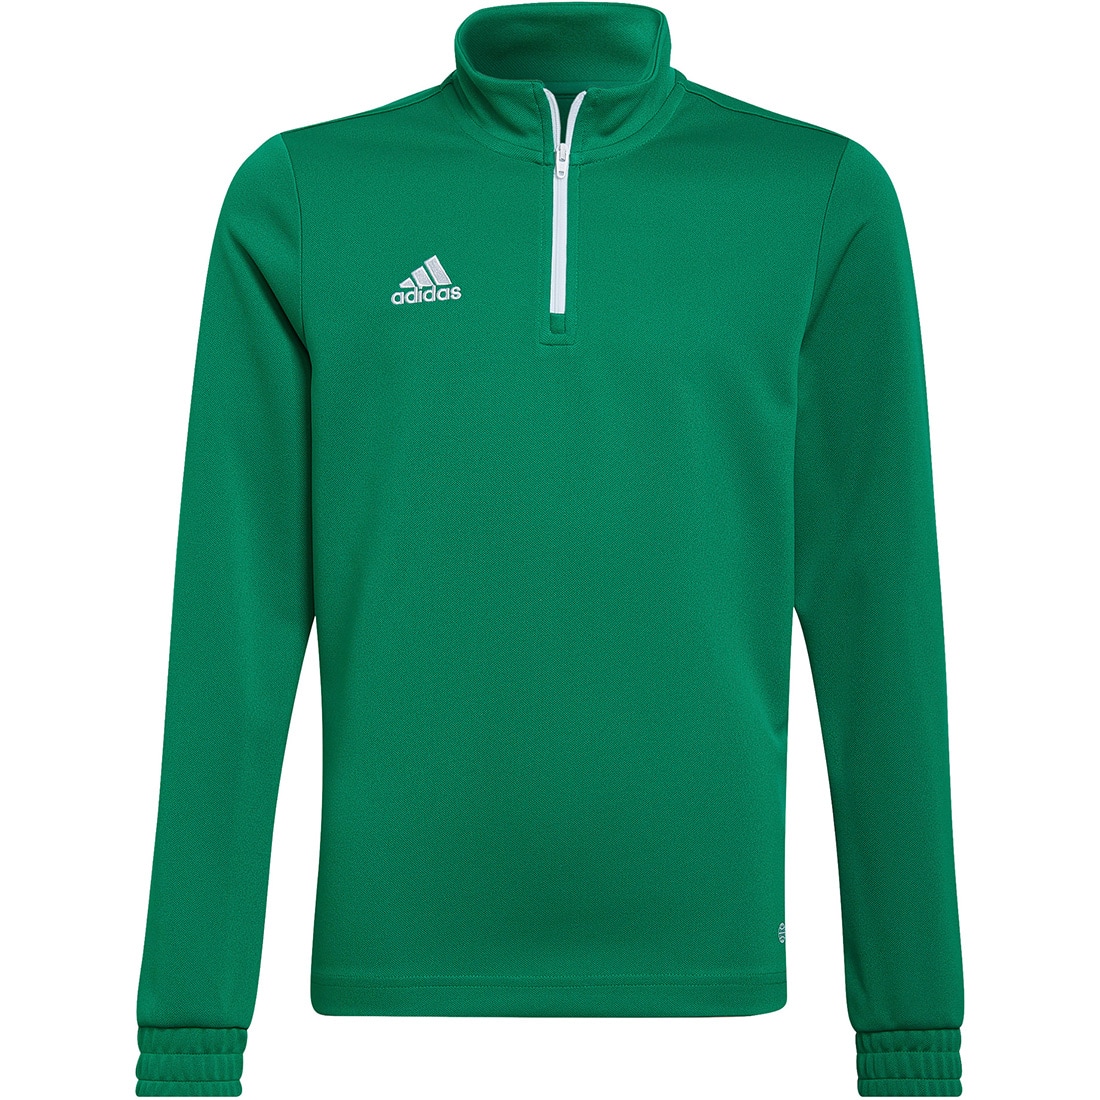 Adidas Kinder Trainingstop Entrada grün-weiß online kaufen 22